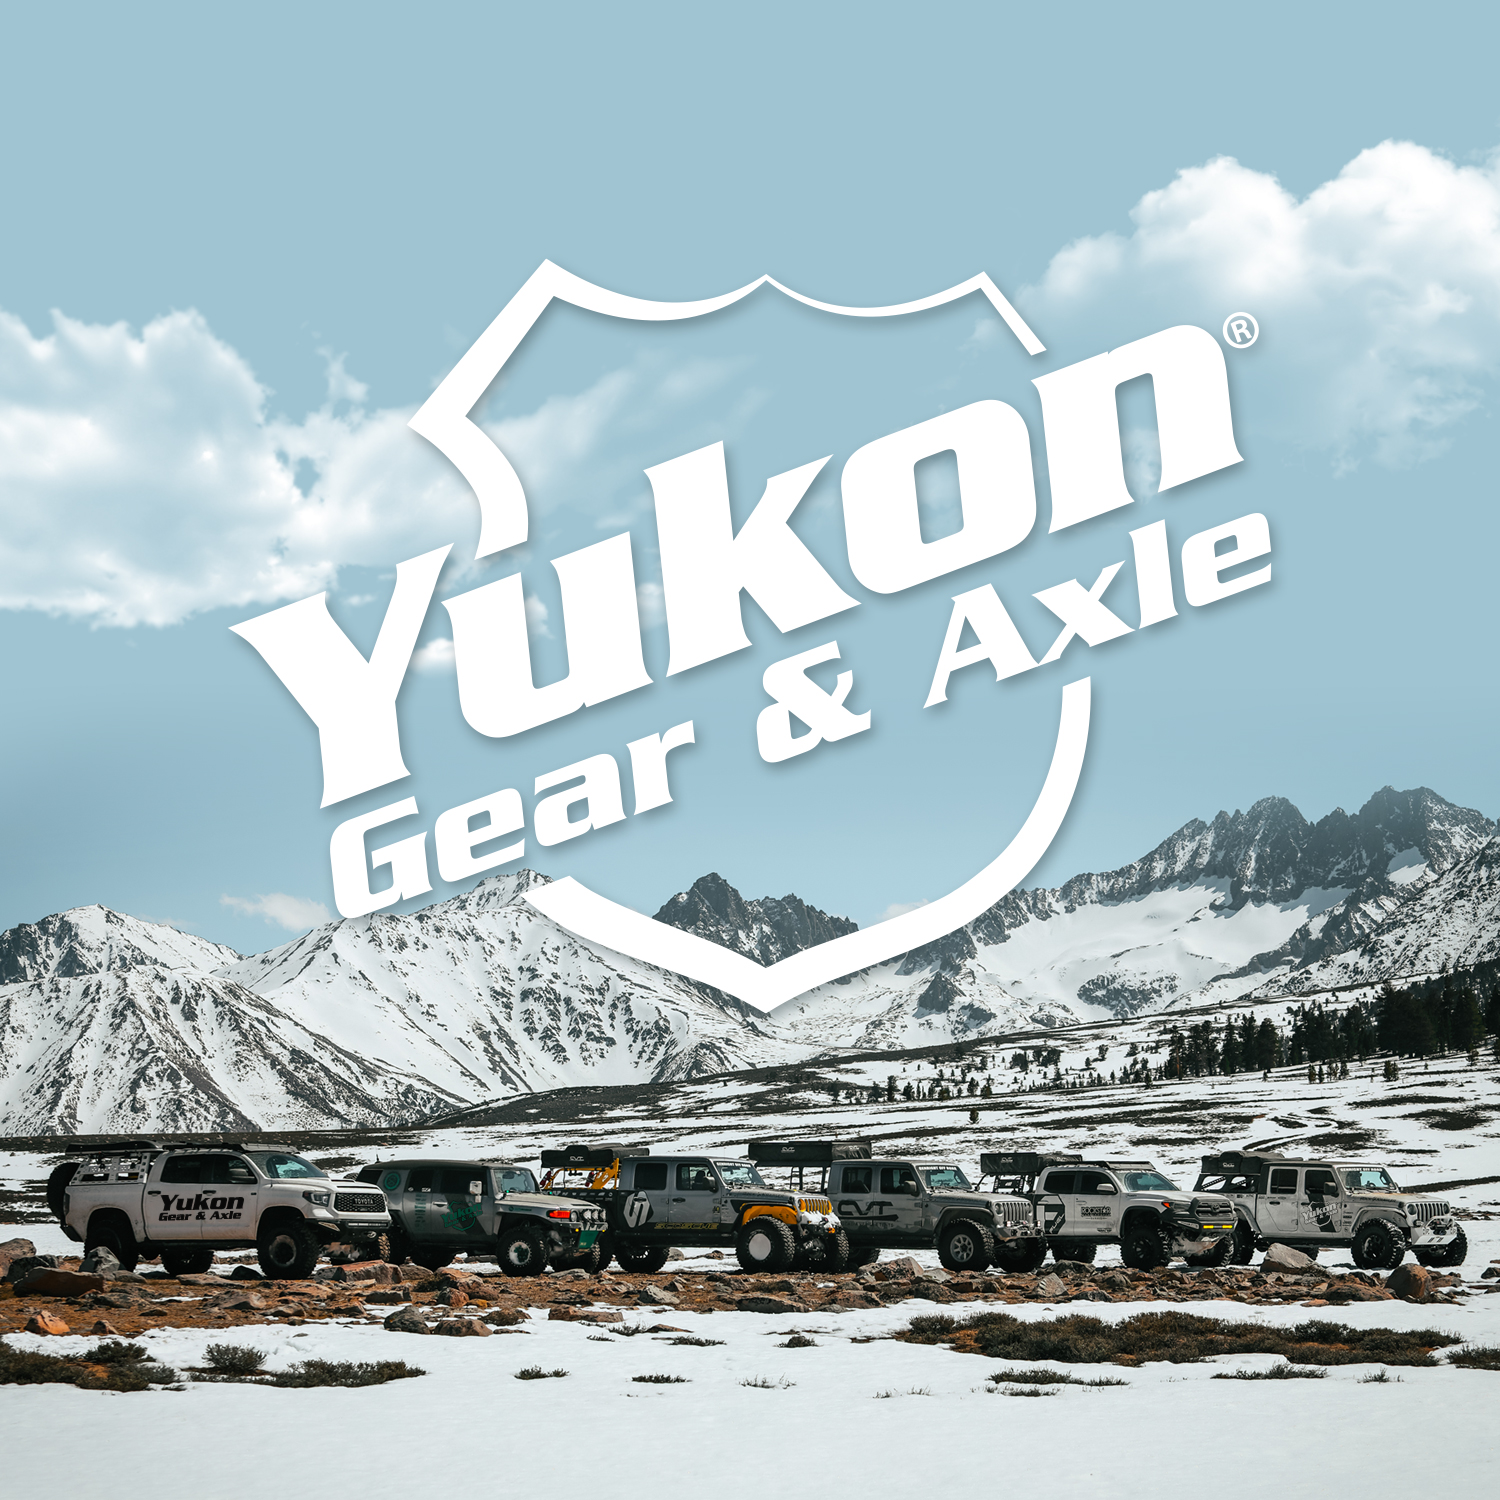 Yukon Gear & Install Kit, reverse rotate Dana 60 & ’88-down GM 14T, 5.38 thick